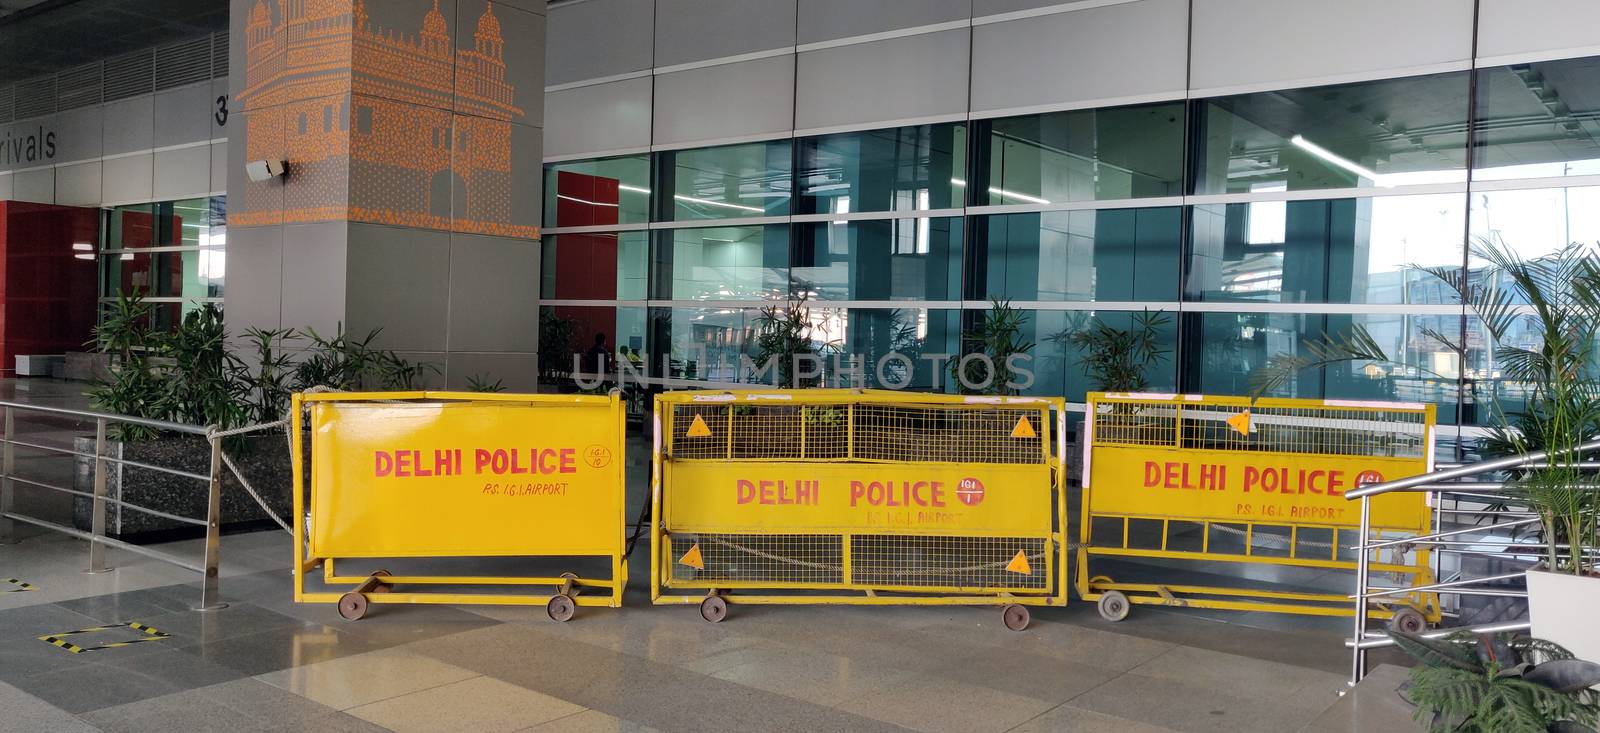 Delhi police barricades on International Arrivals in IGI Airport by mshivangi92